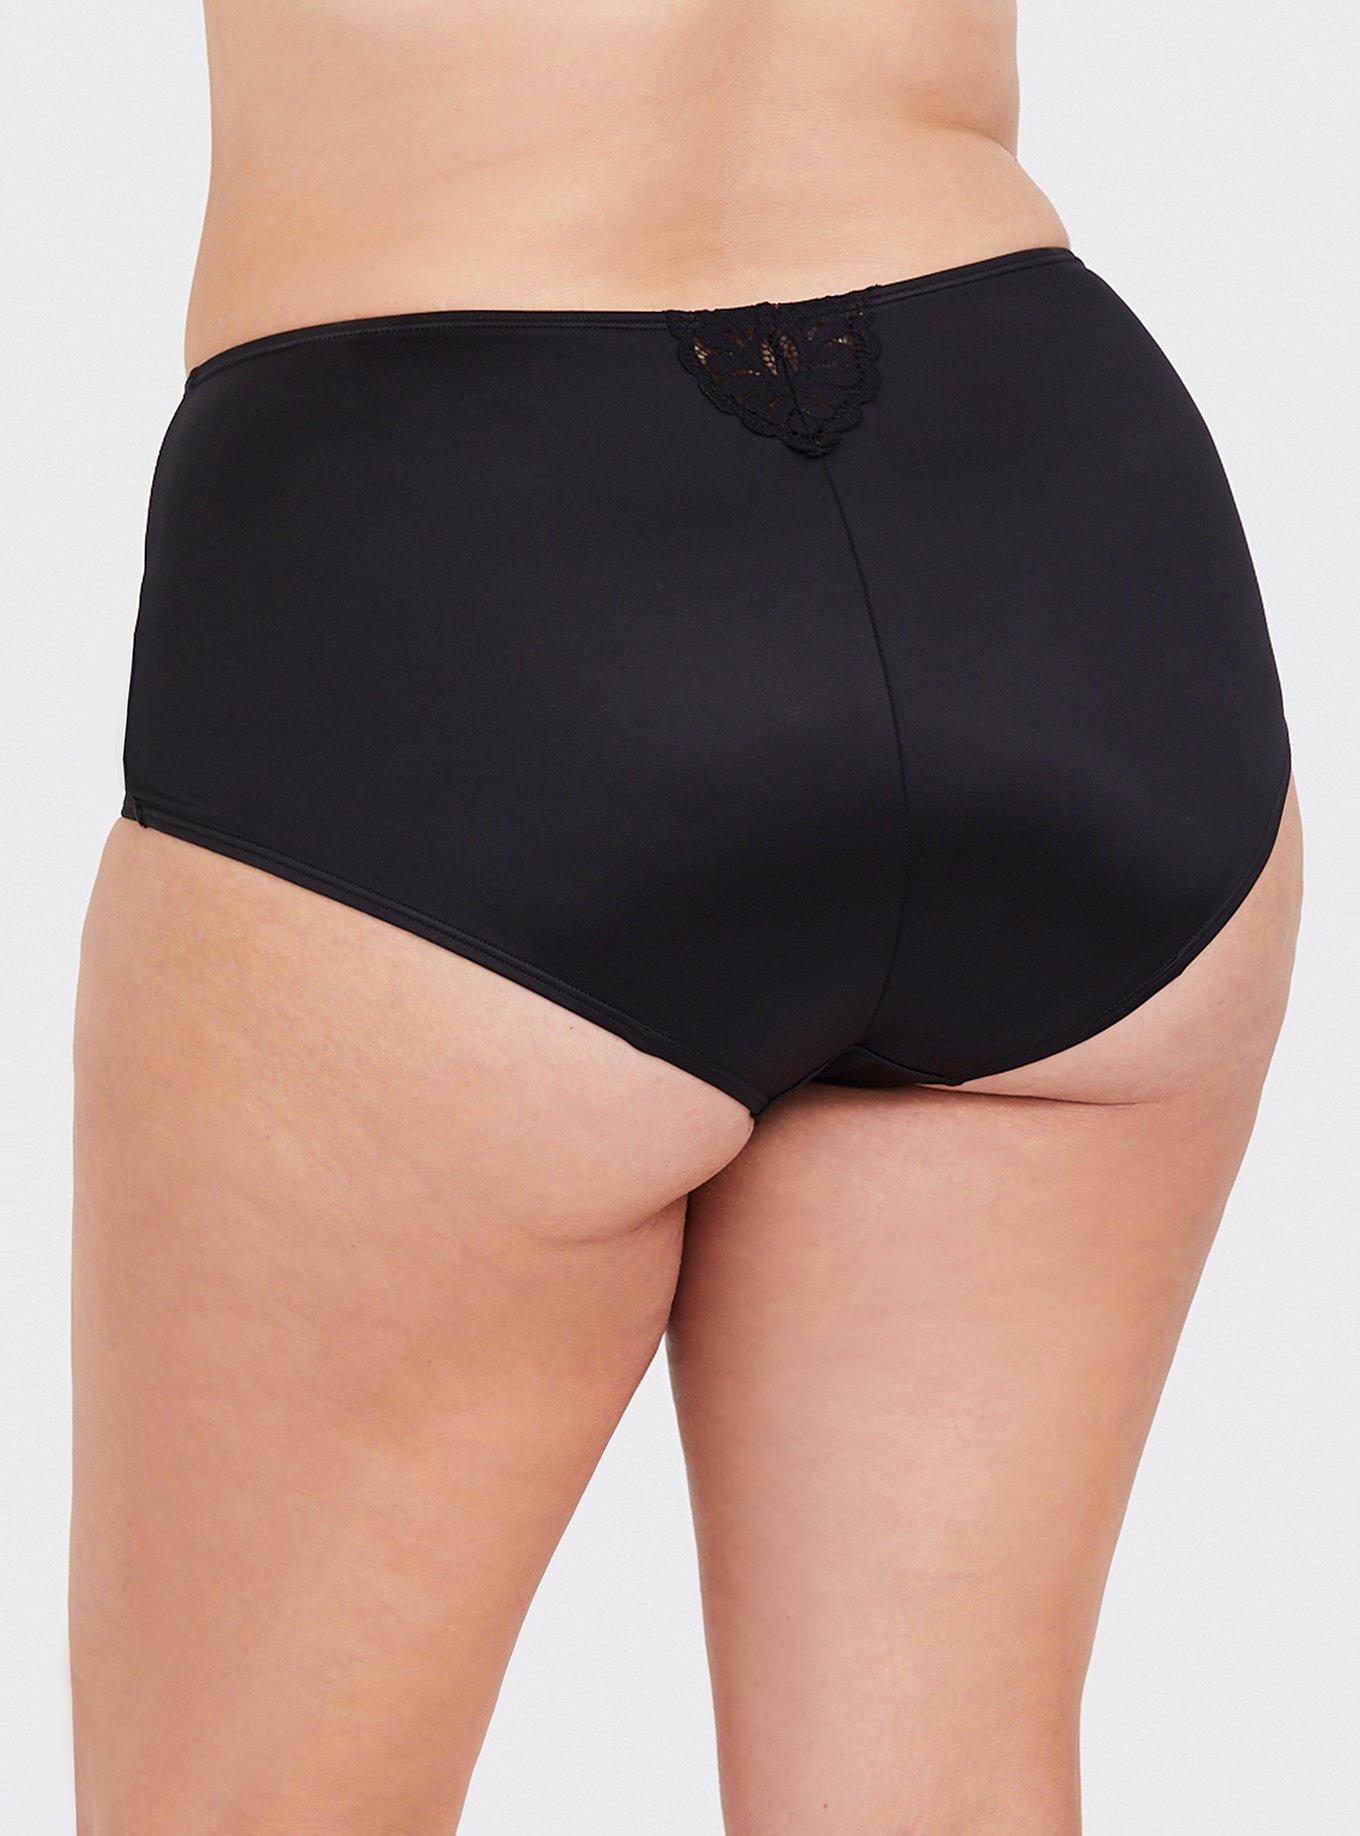 Plus Size - Tara Lynn - Microfiber & Lace Brief Panty - Torrid